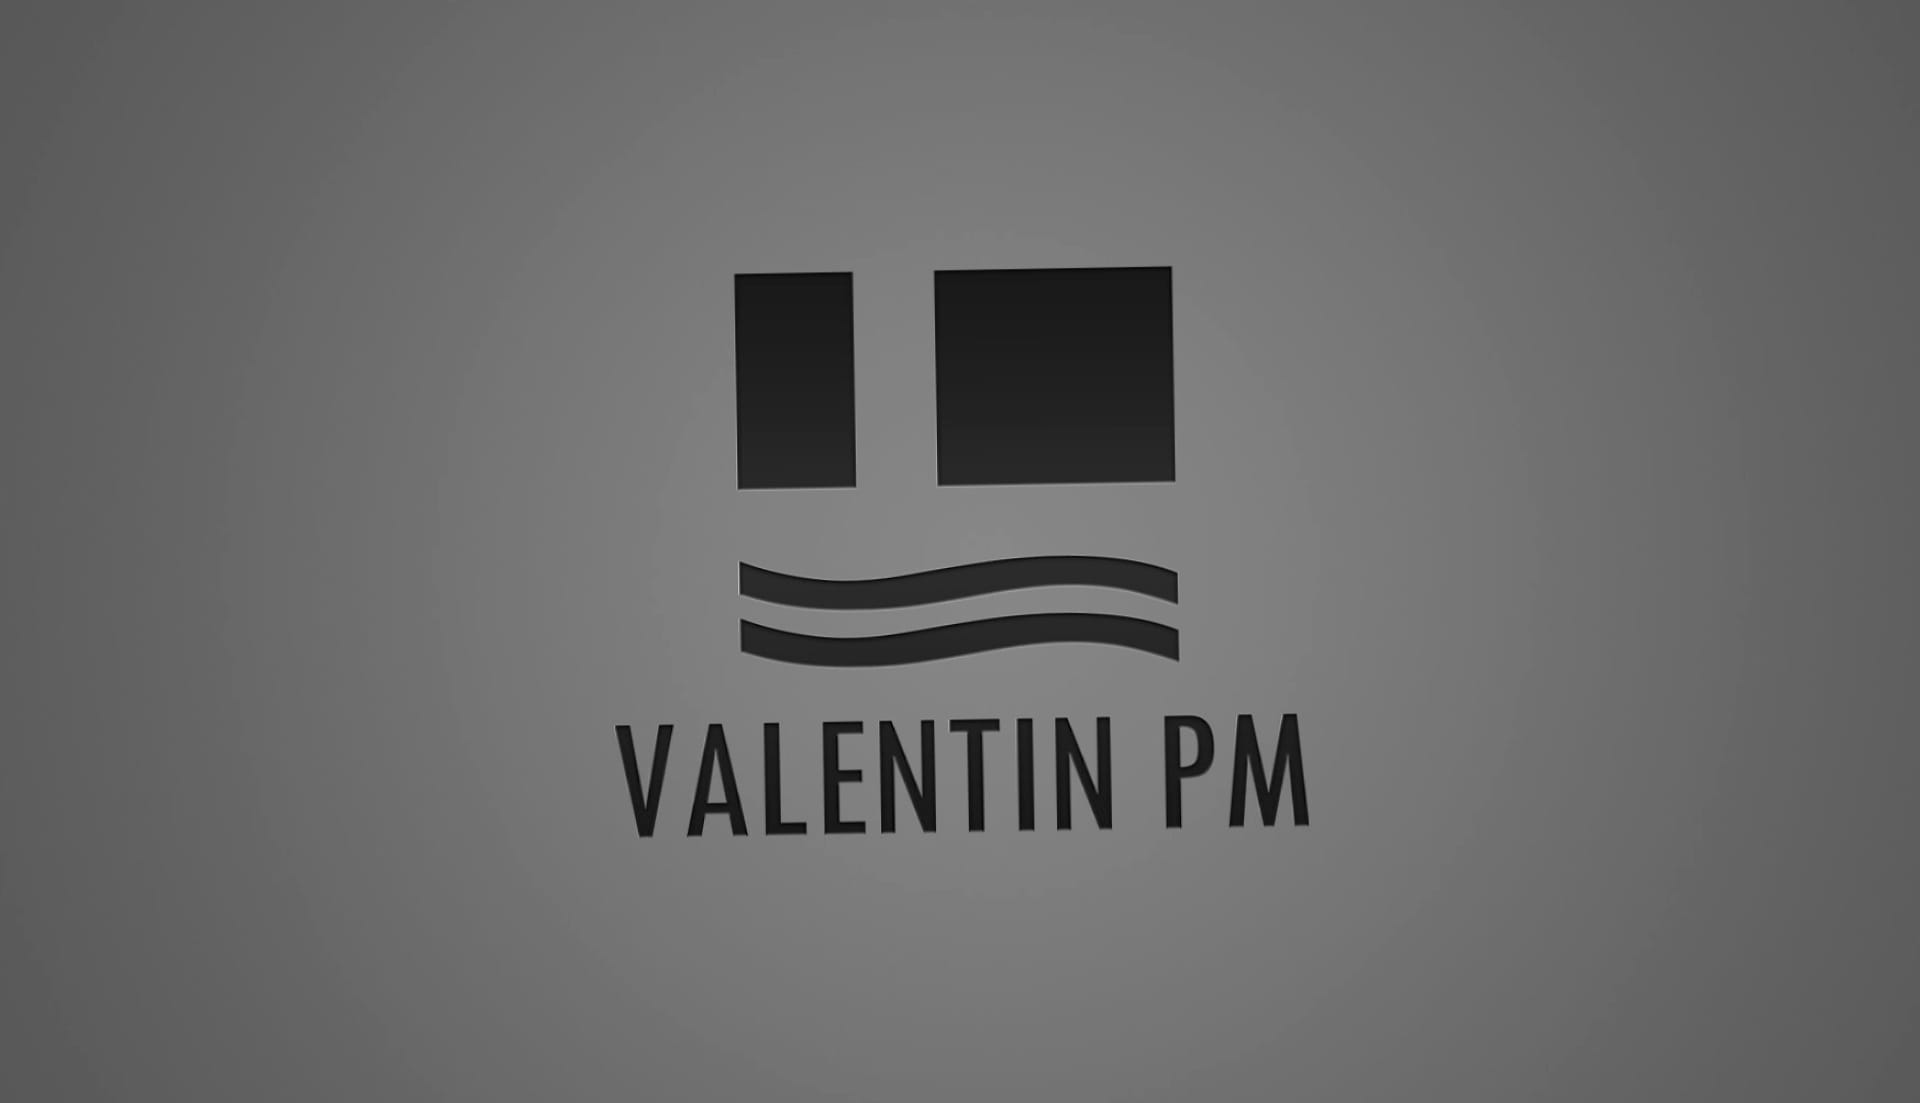 Valentin PM at 2048 x 2048 iPad size wallpapers HD quality